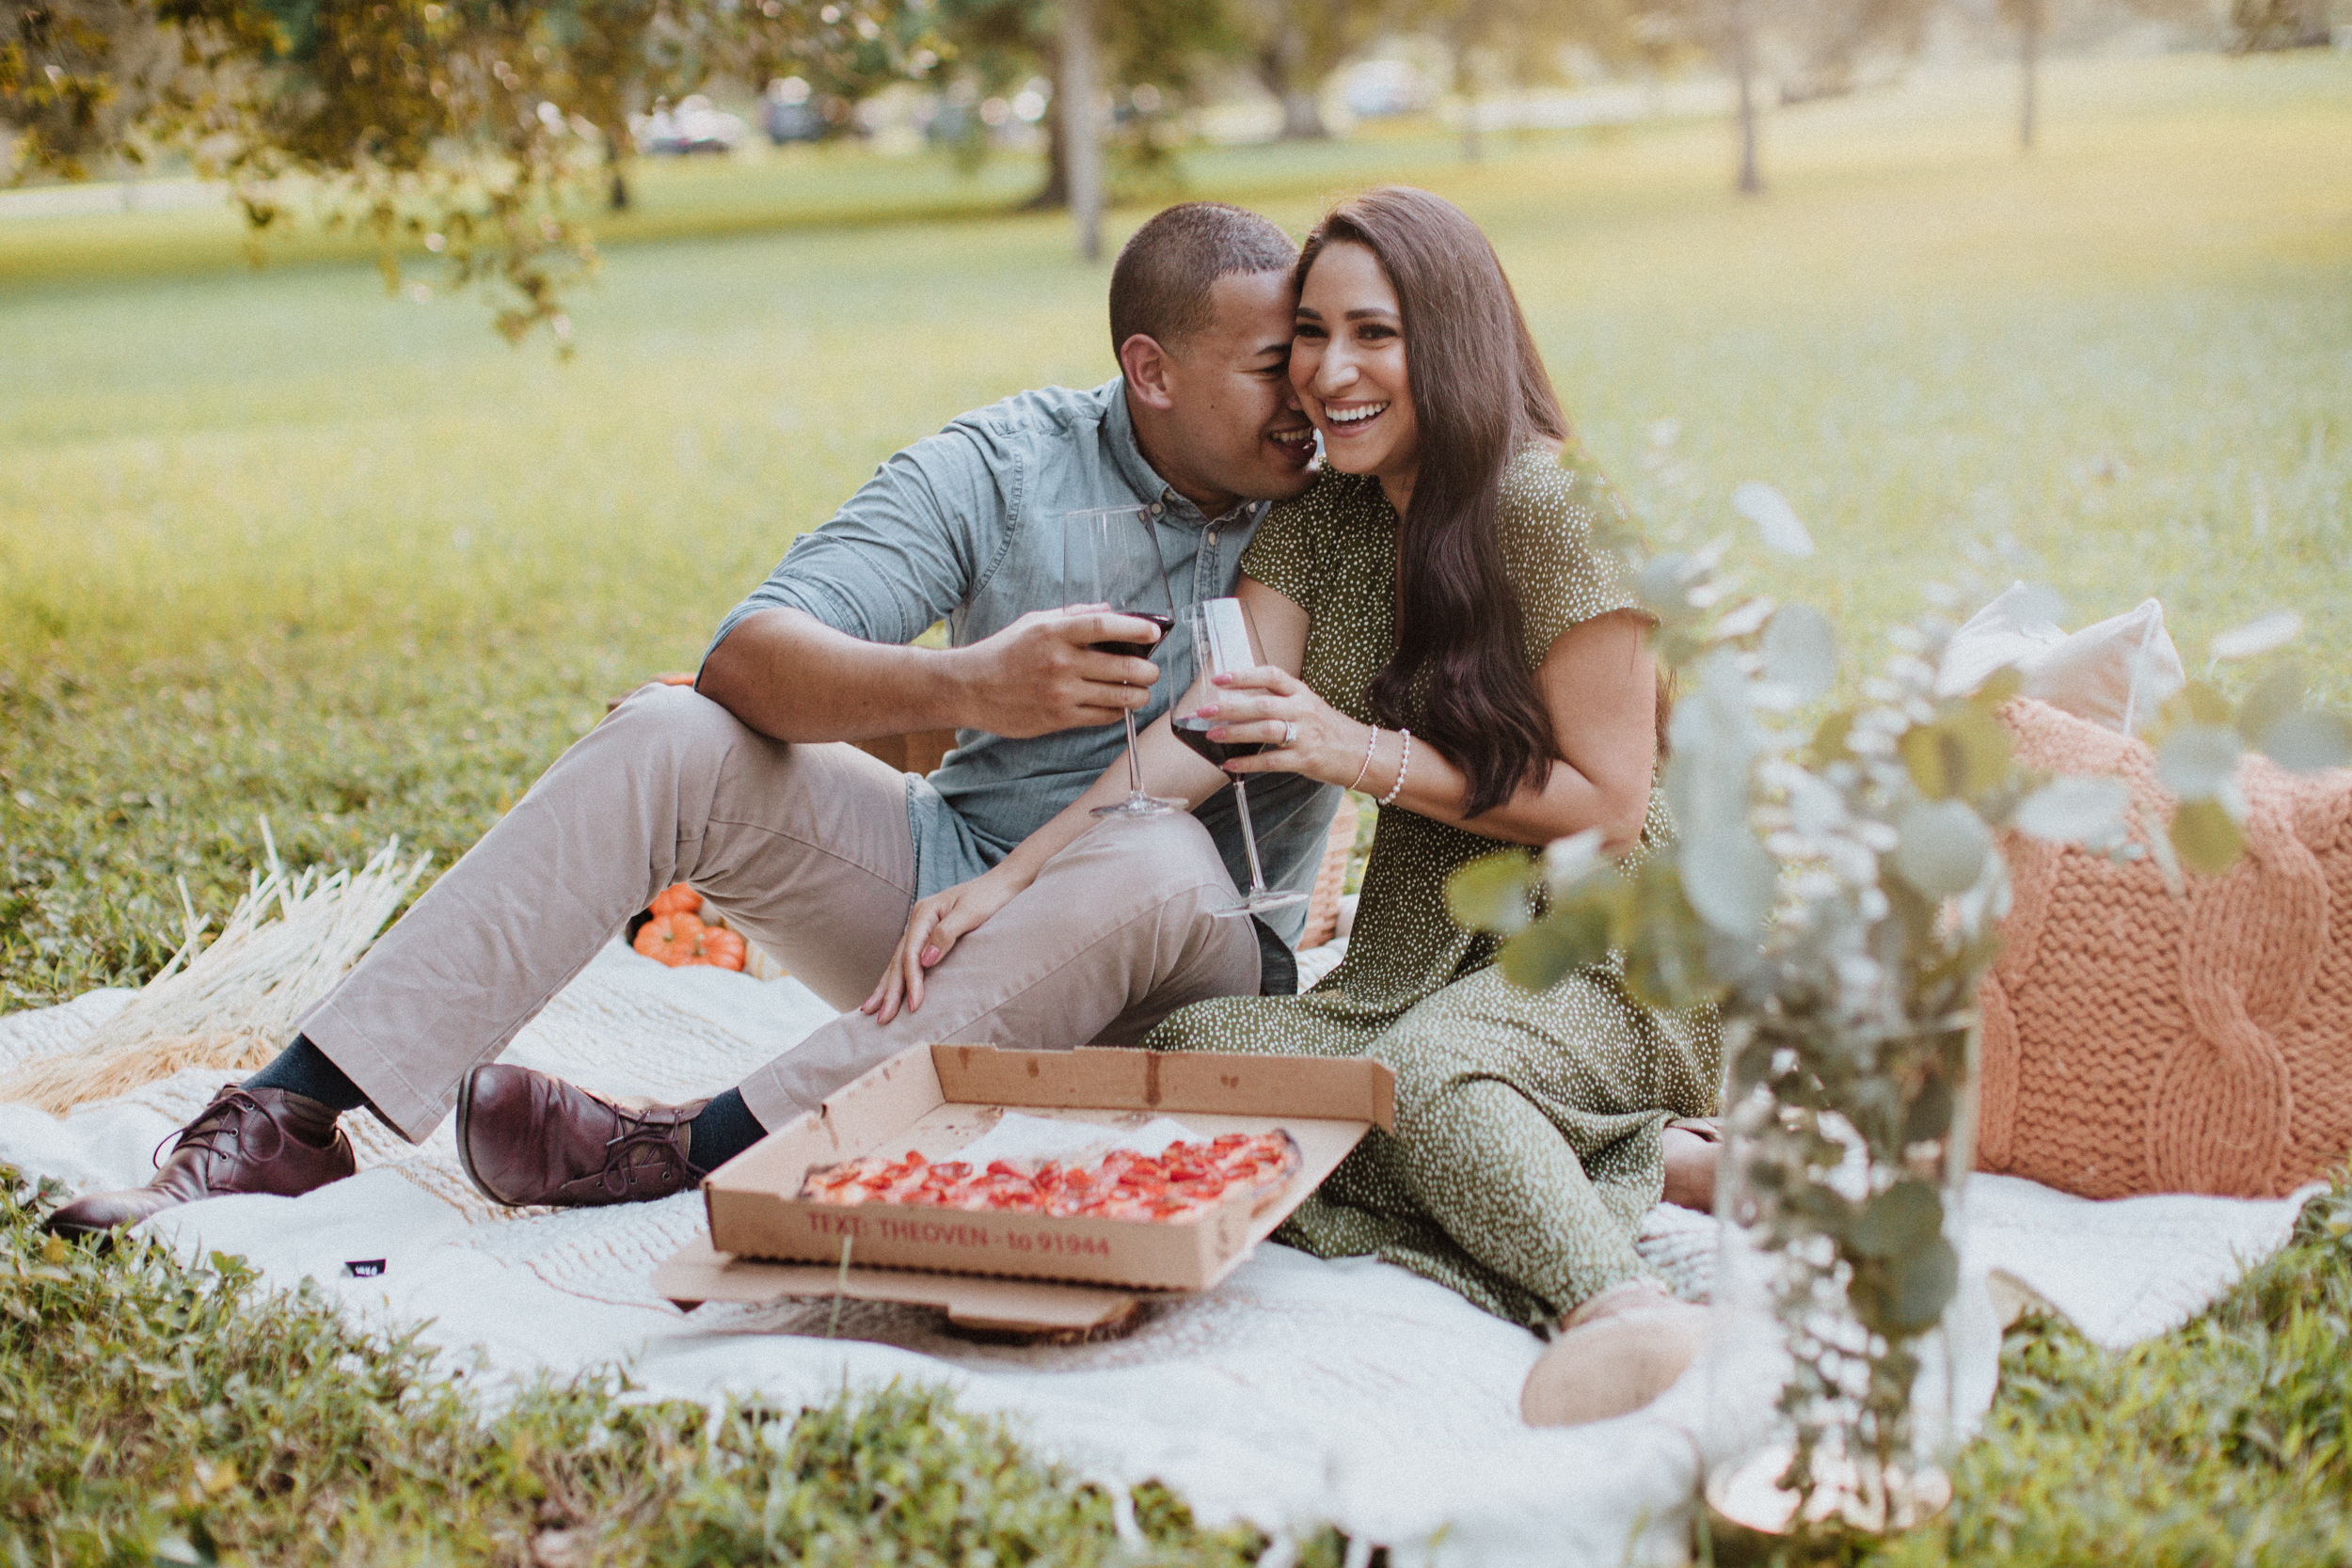 Fall Photoshoot - Pizza & Wine Picnic